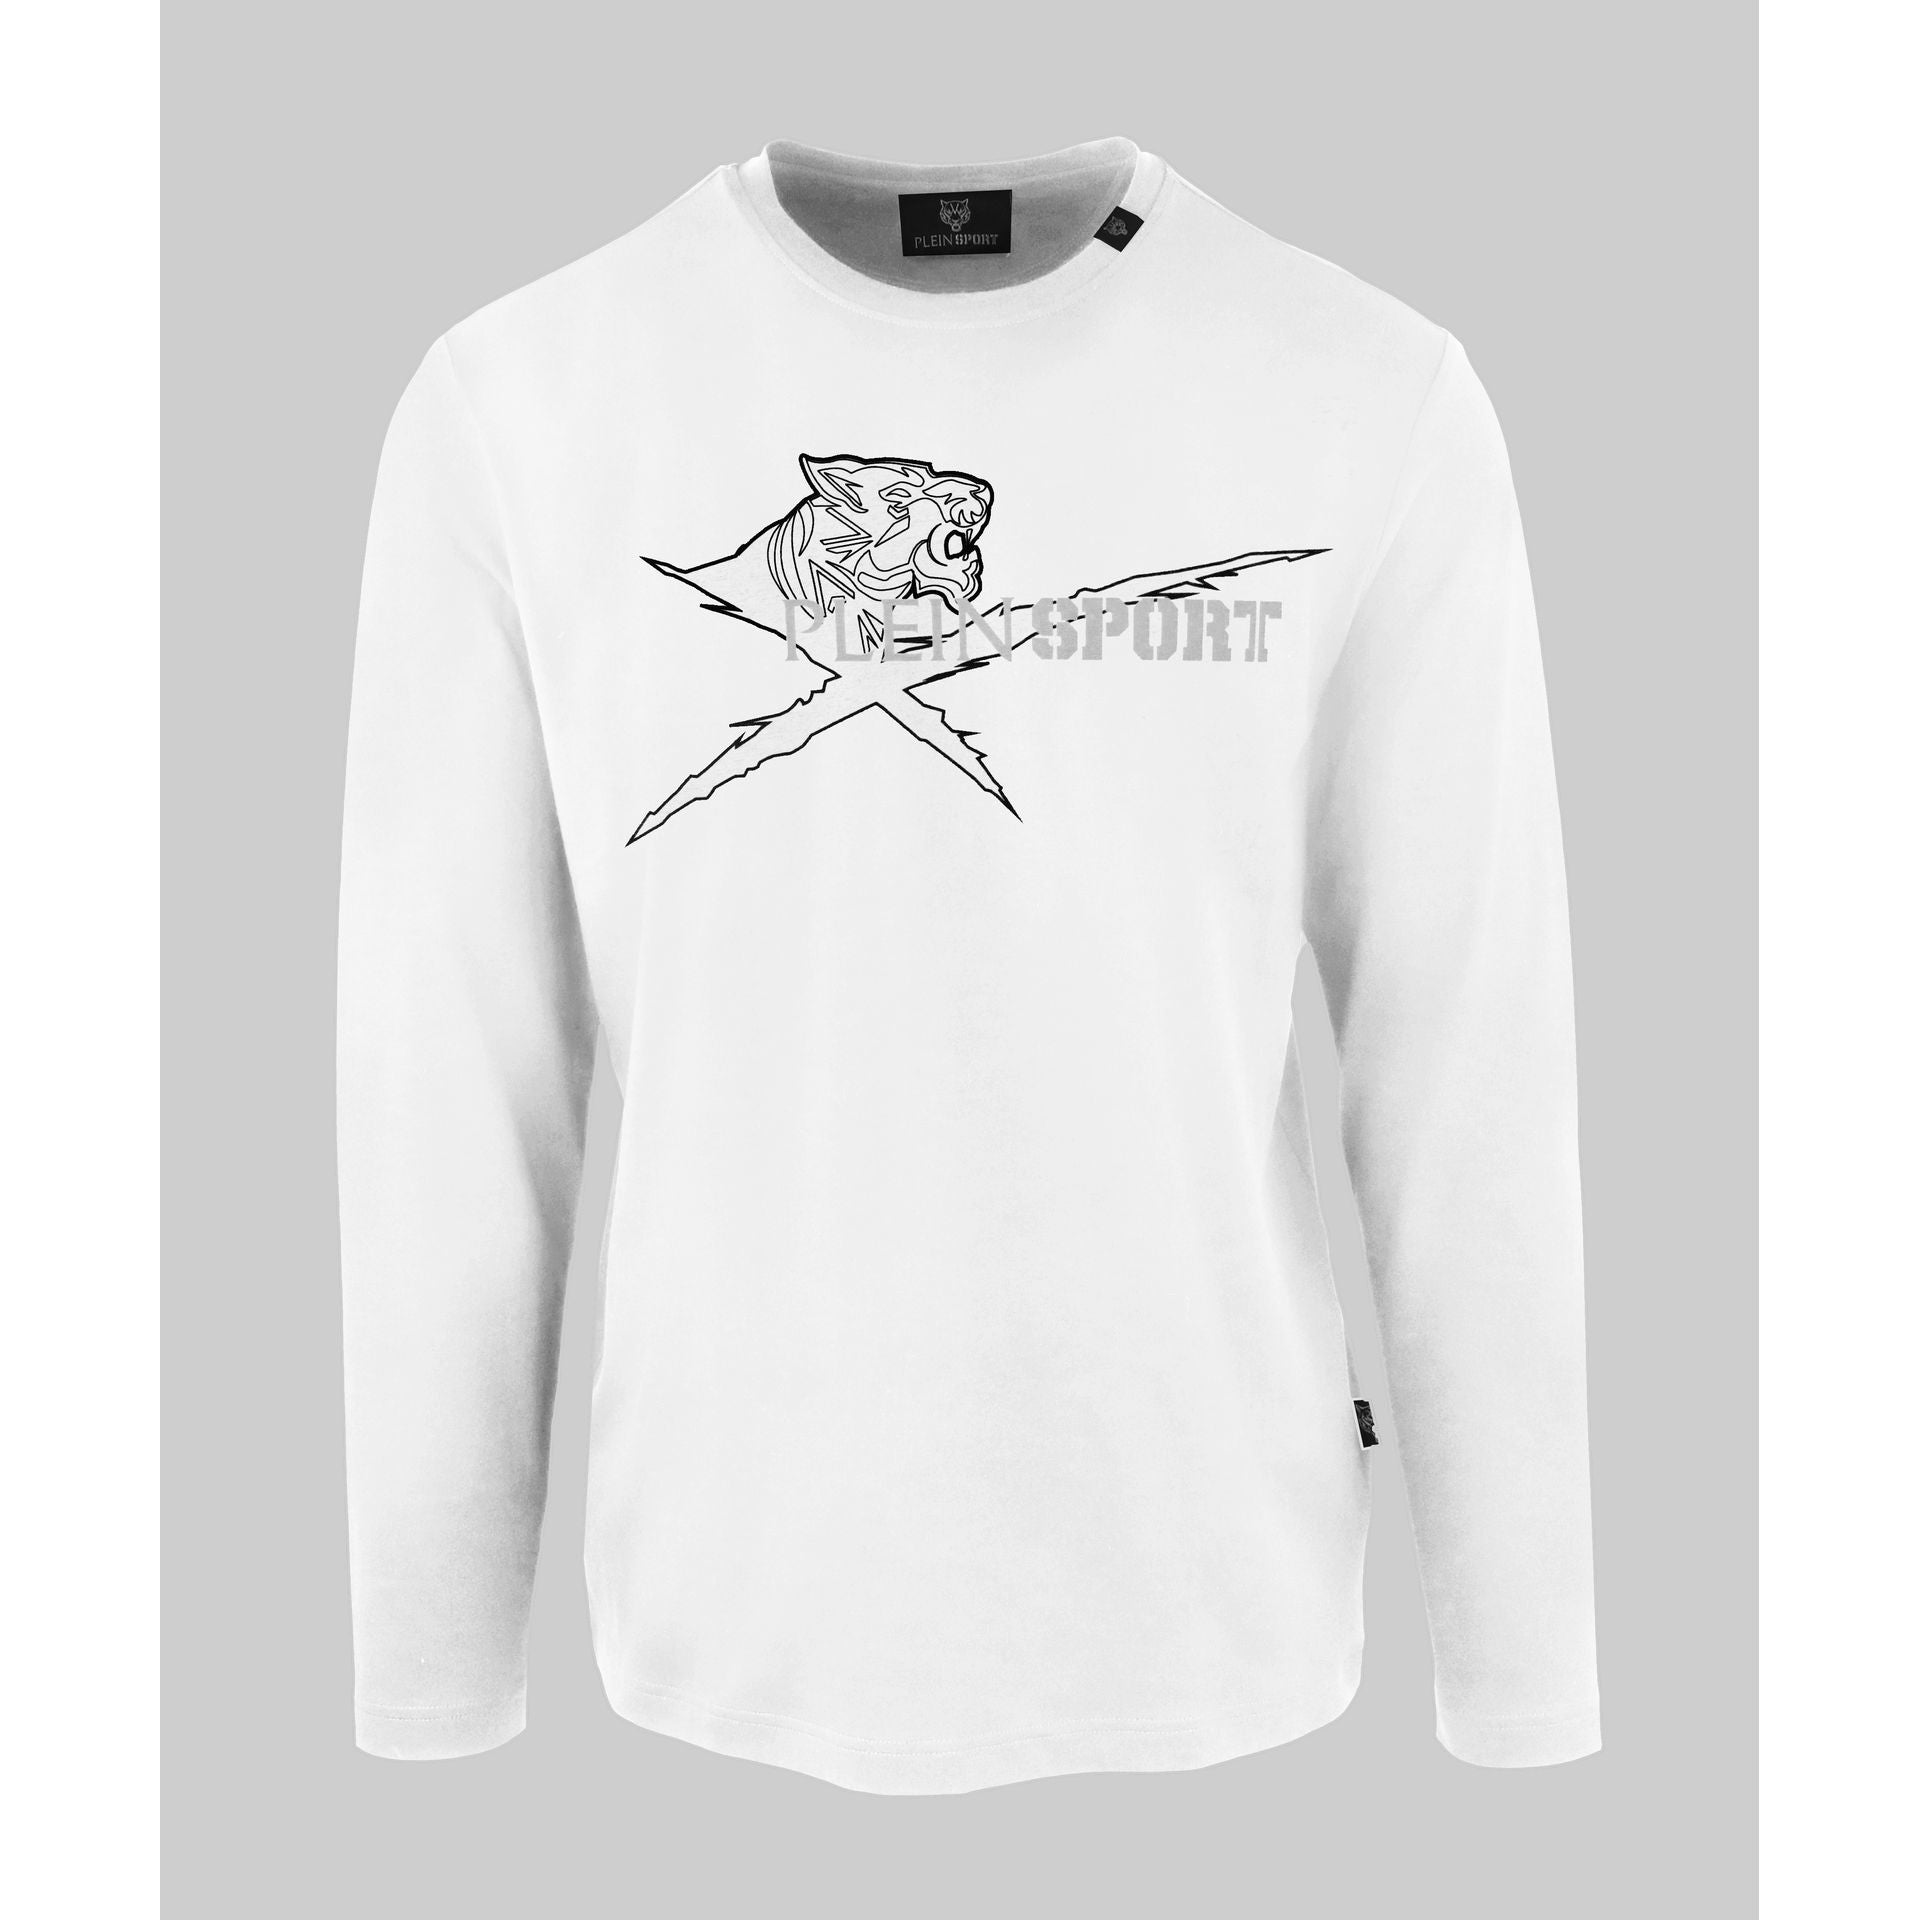 Fashionsarah.com Plein Sport Sweatshirts